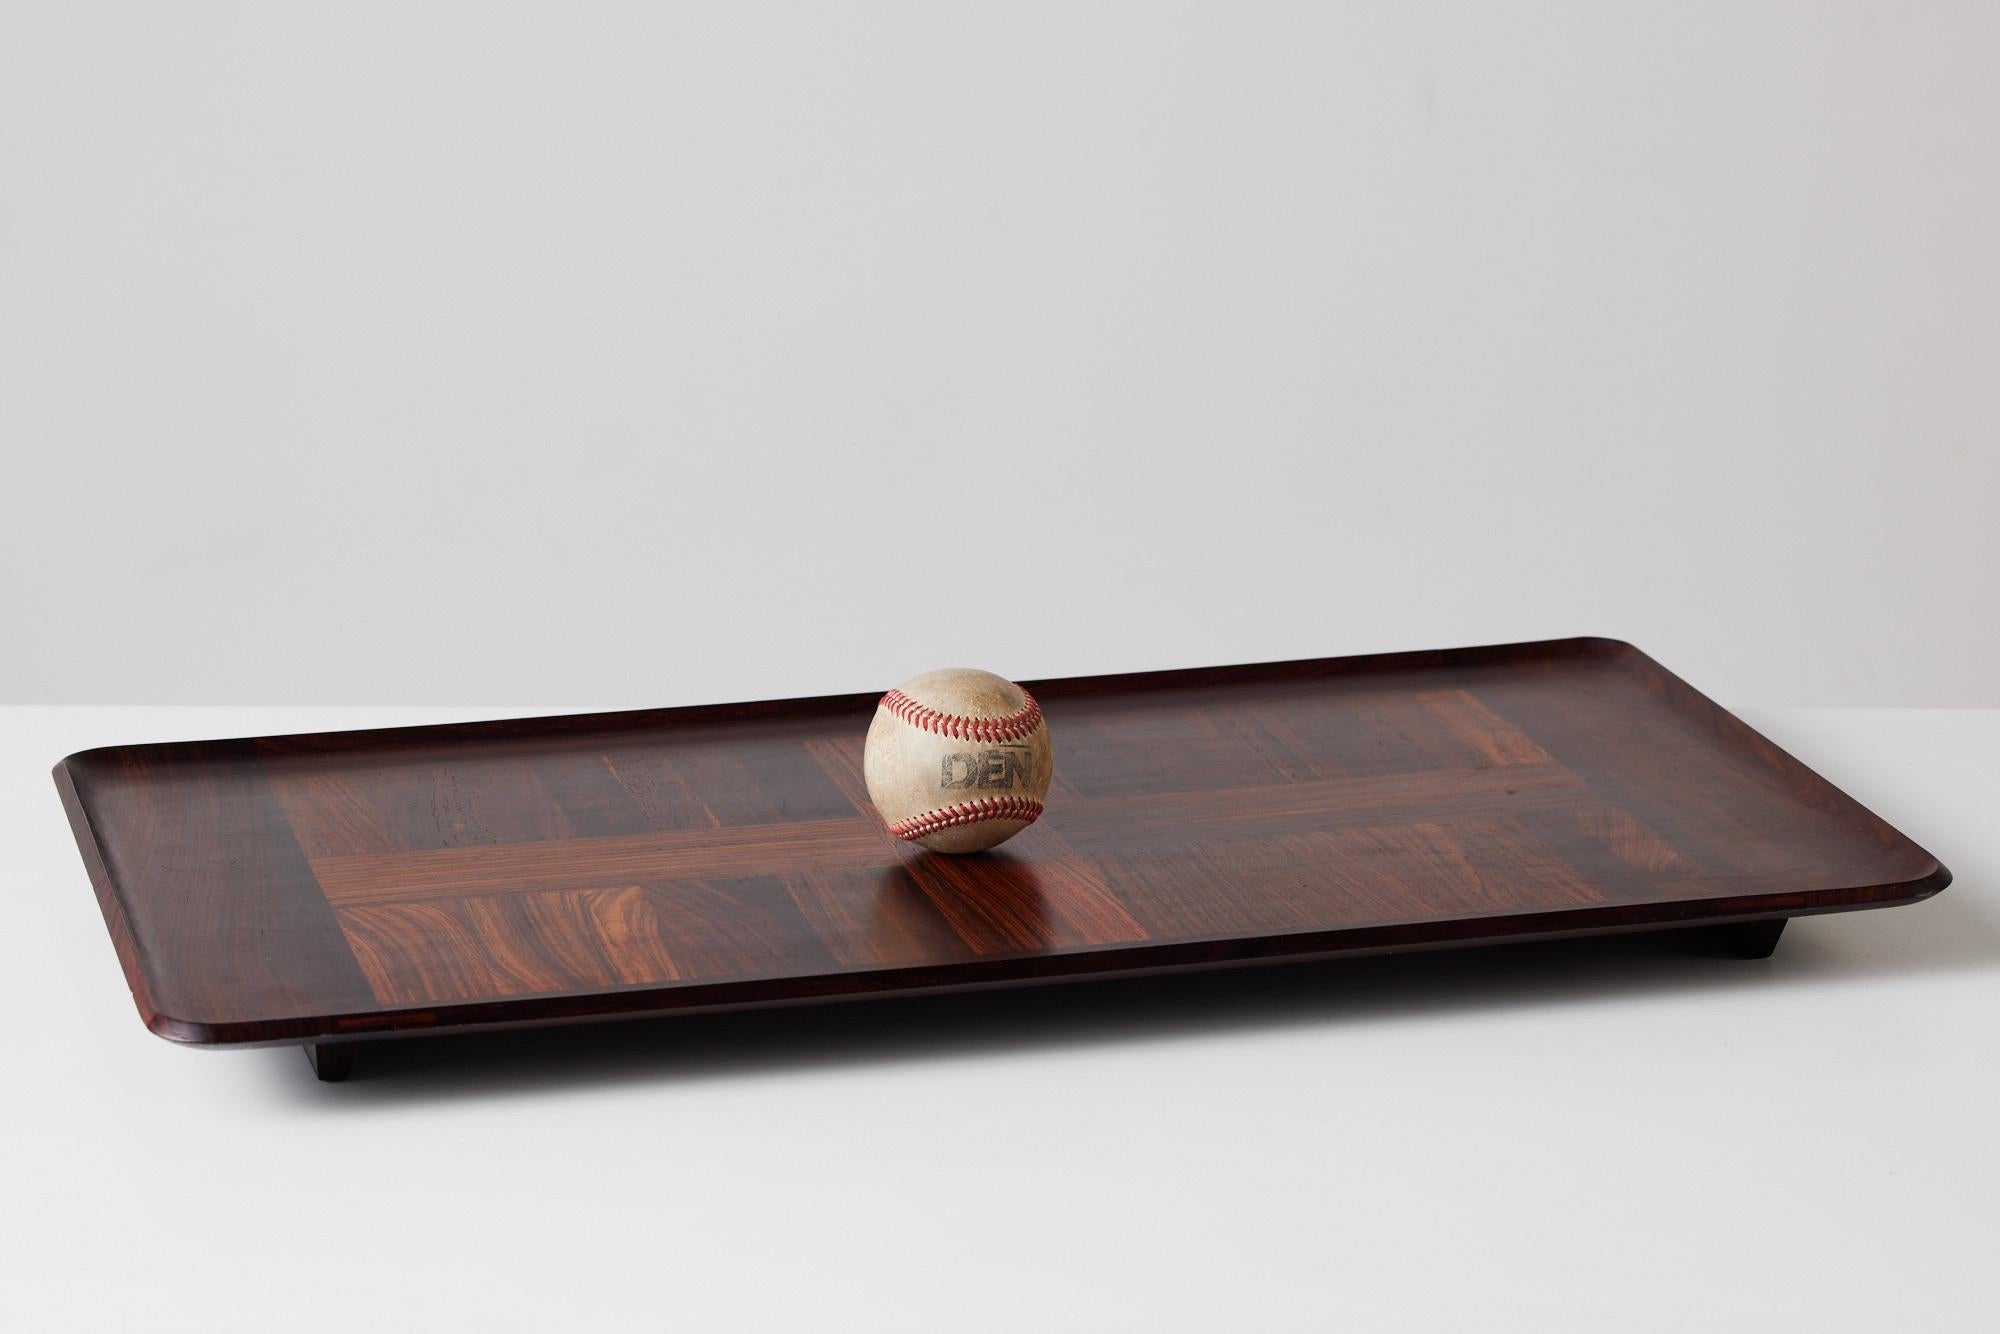 Rectangular tray designed by Jens Quistgaard for Dansk's 